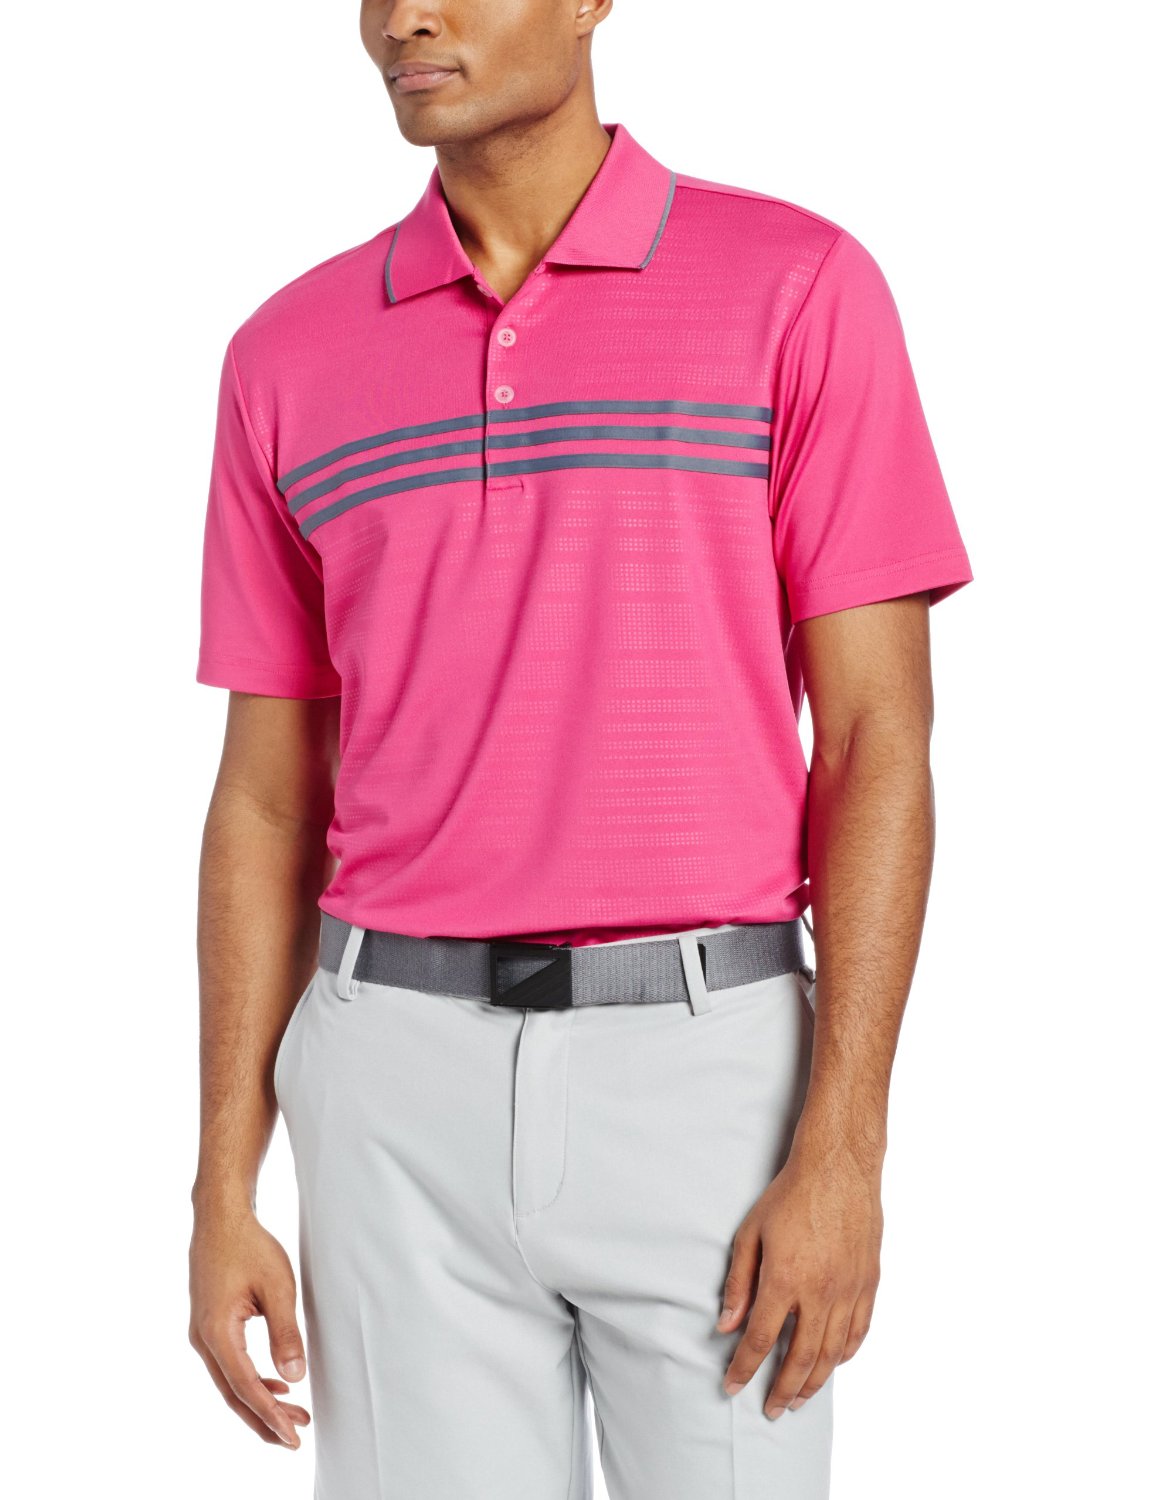 Adidas Mens Puremotion Climacool 3 Stripes Chest Golf Polo Shirts